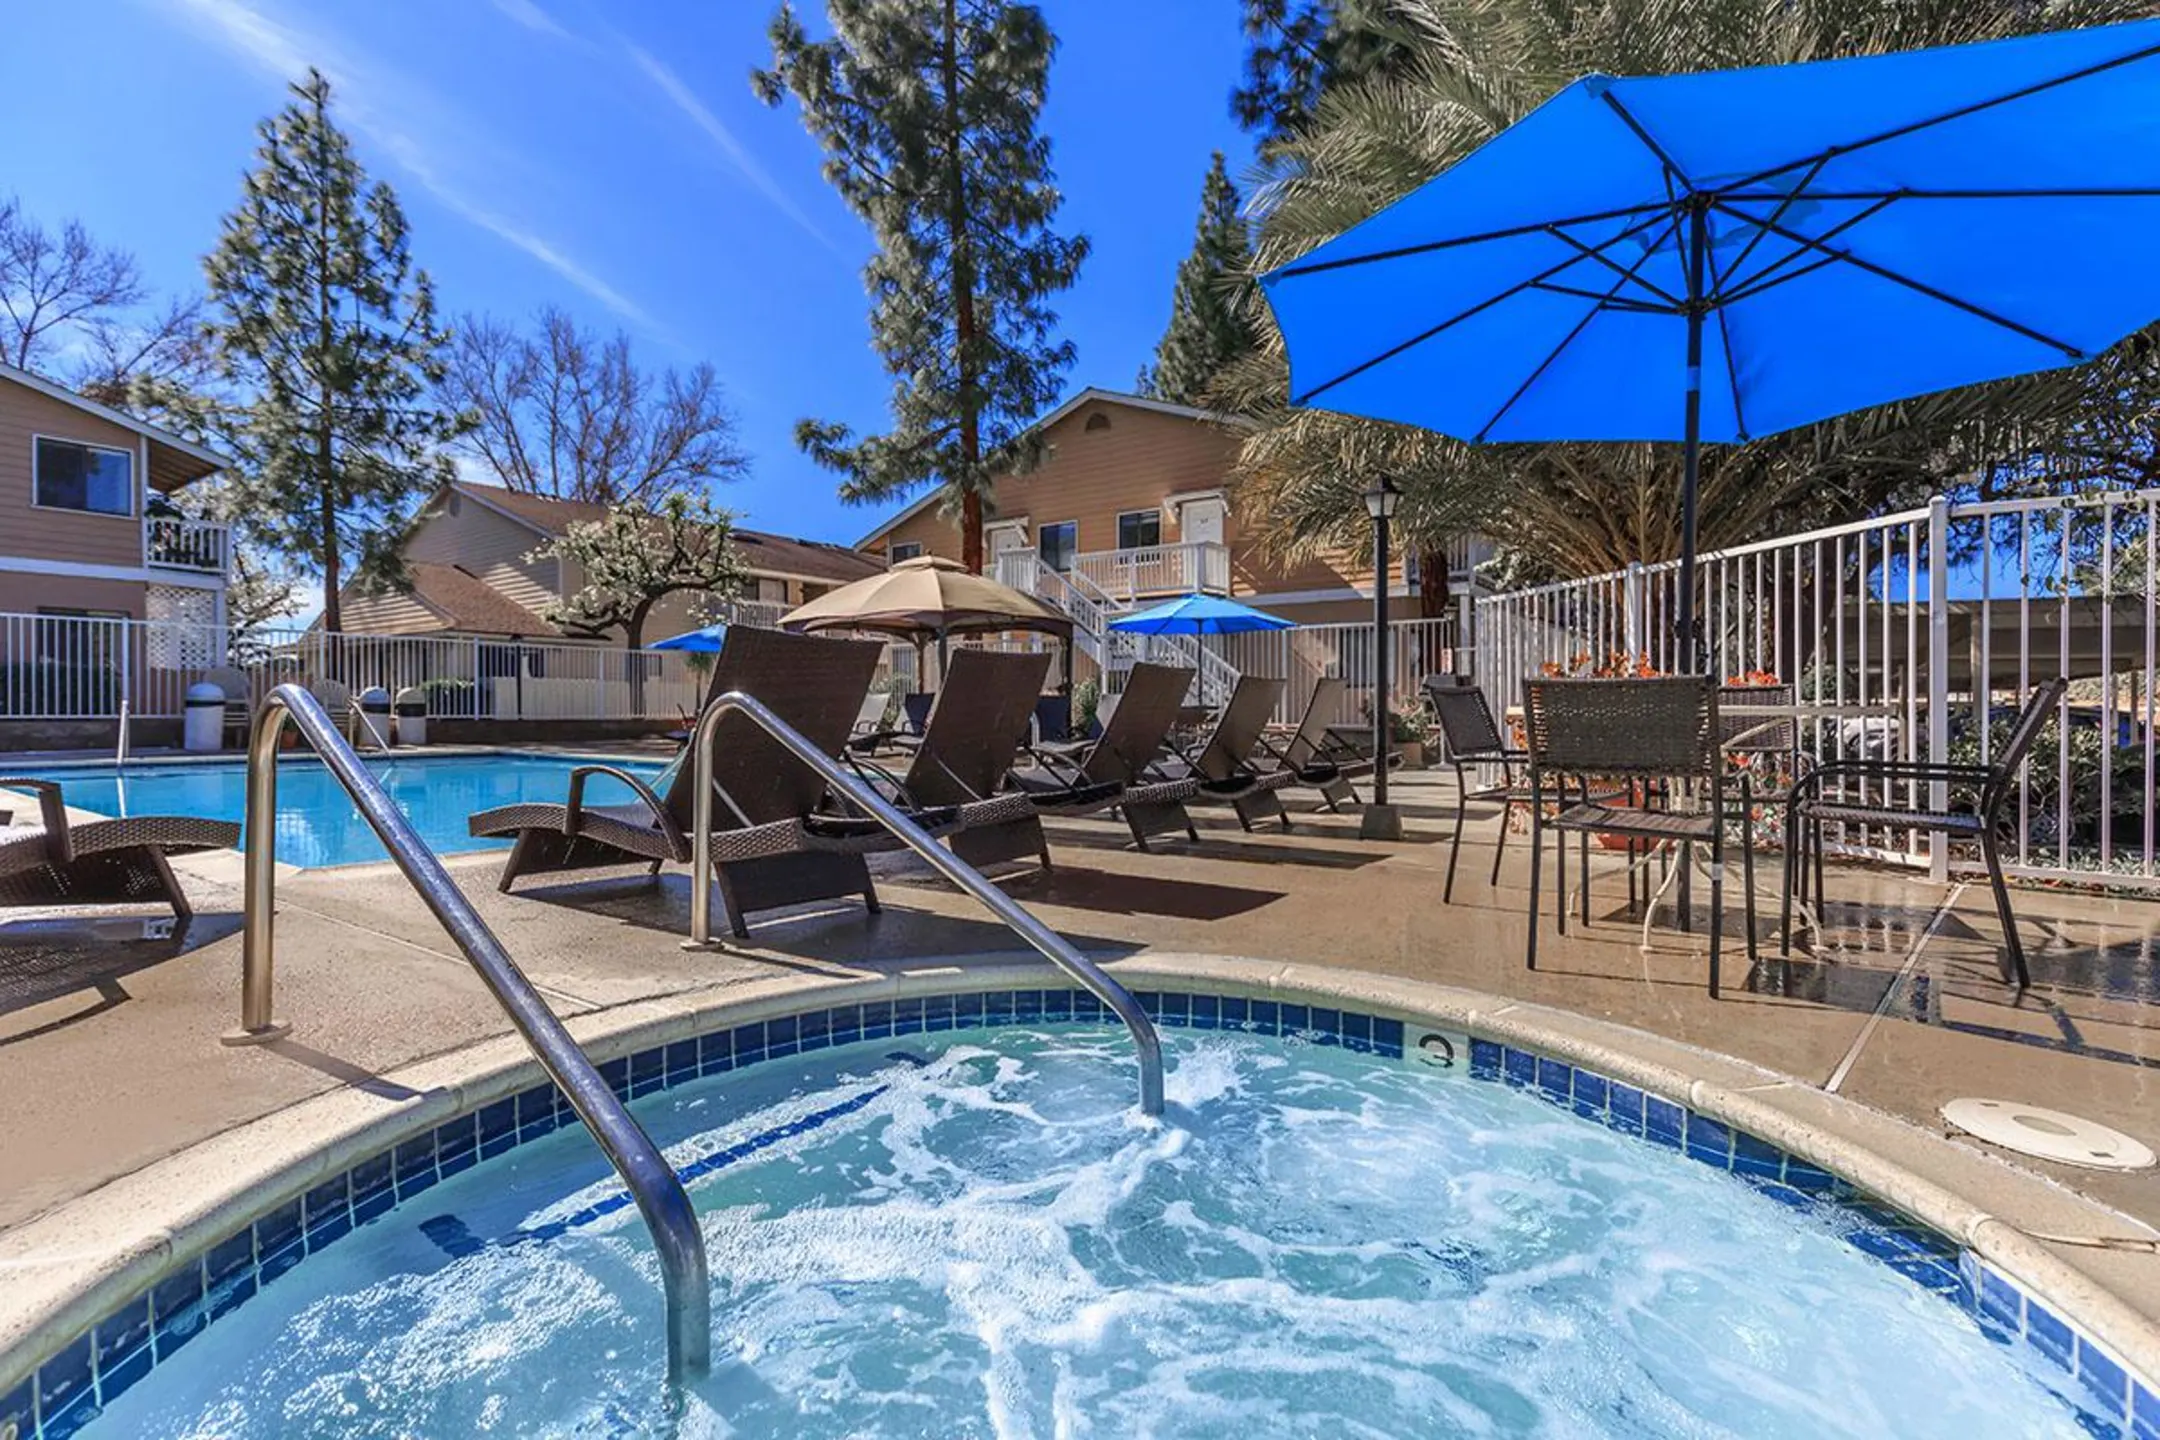 Pool - Creekside Meadows Apartments - Alpine, CA